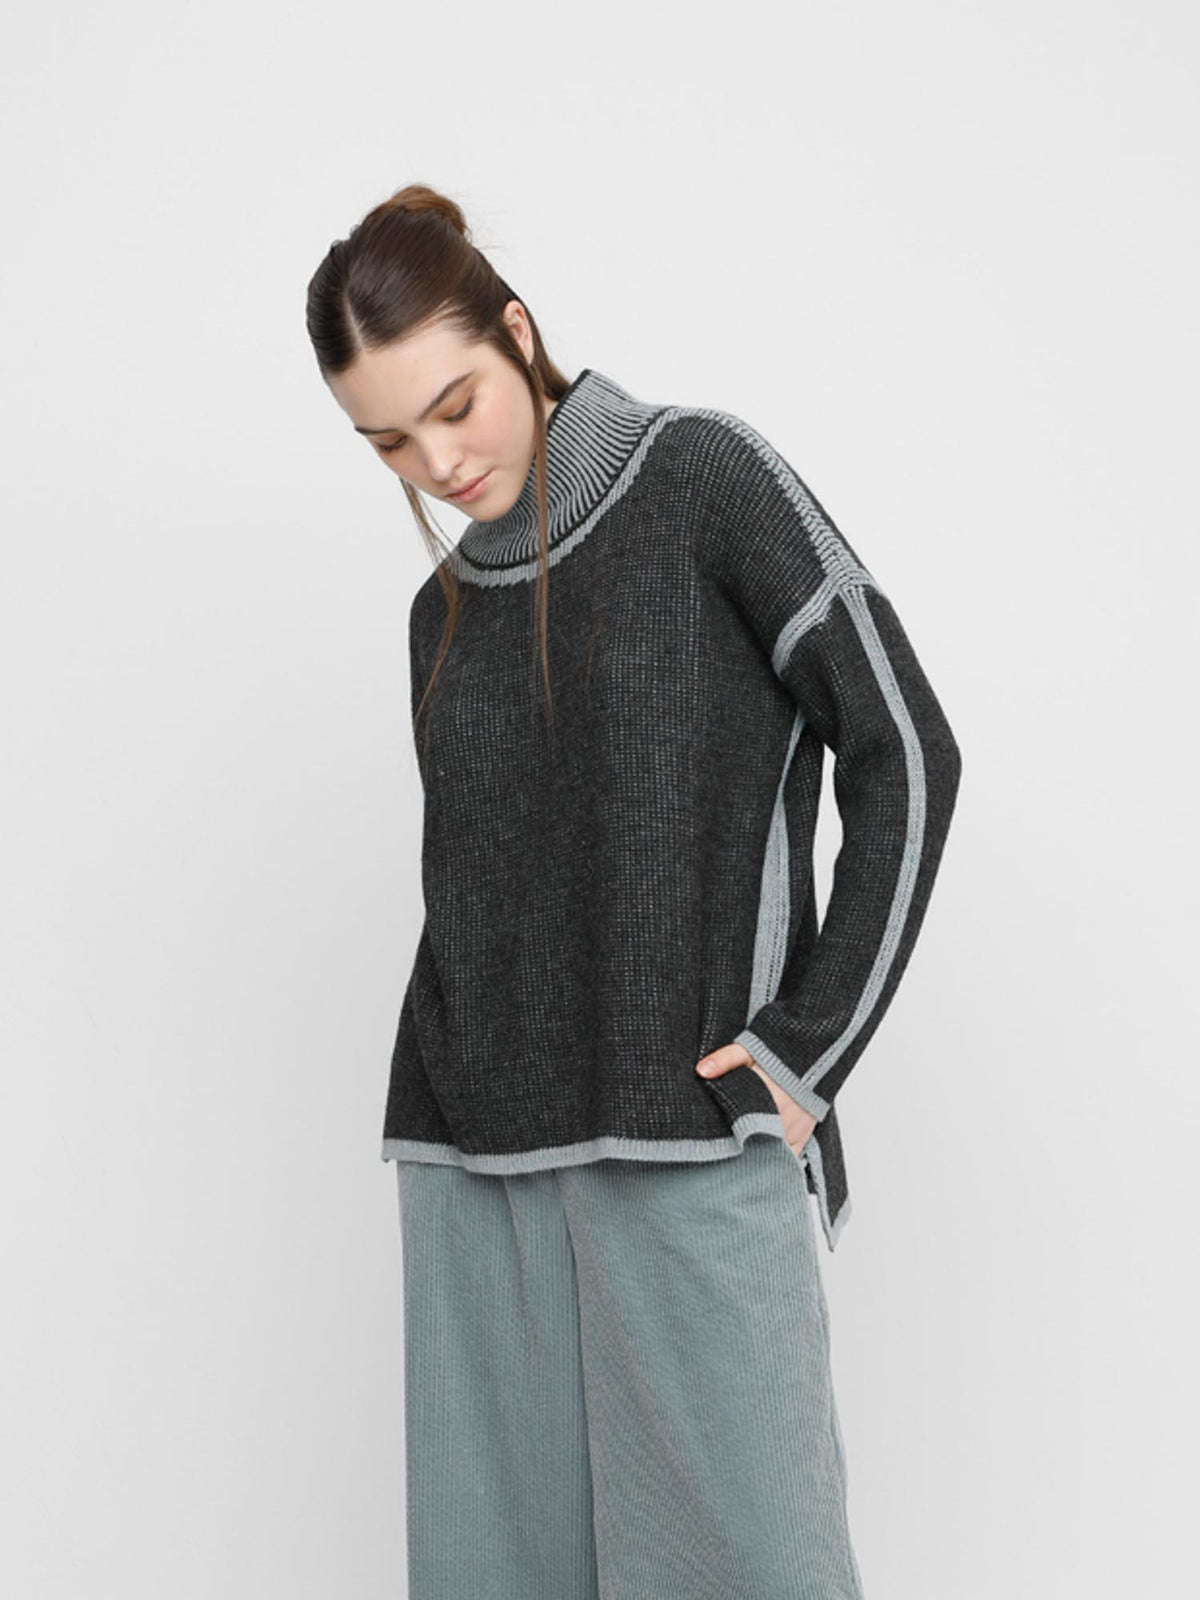 Ozai N Ku Contrast Knit Turtle Neck Sweater, Grey - Statement Boutique